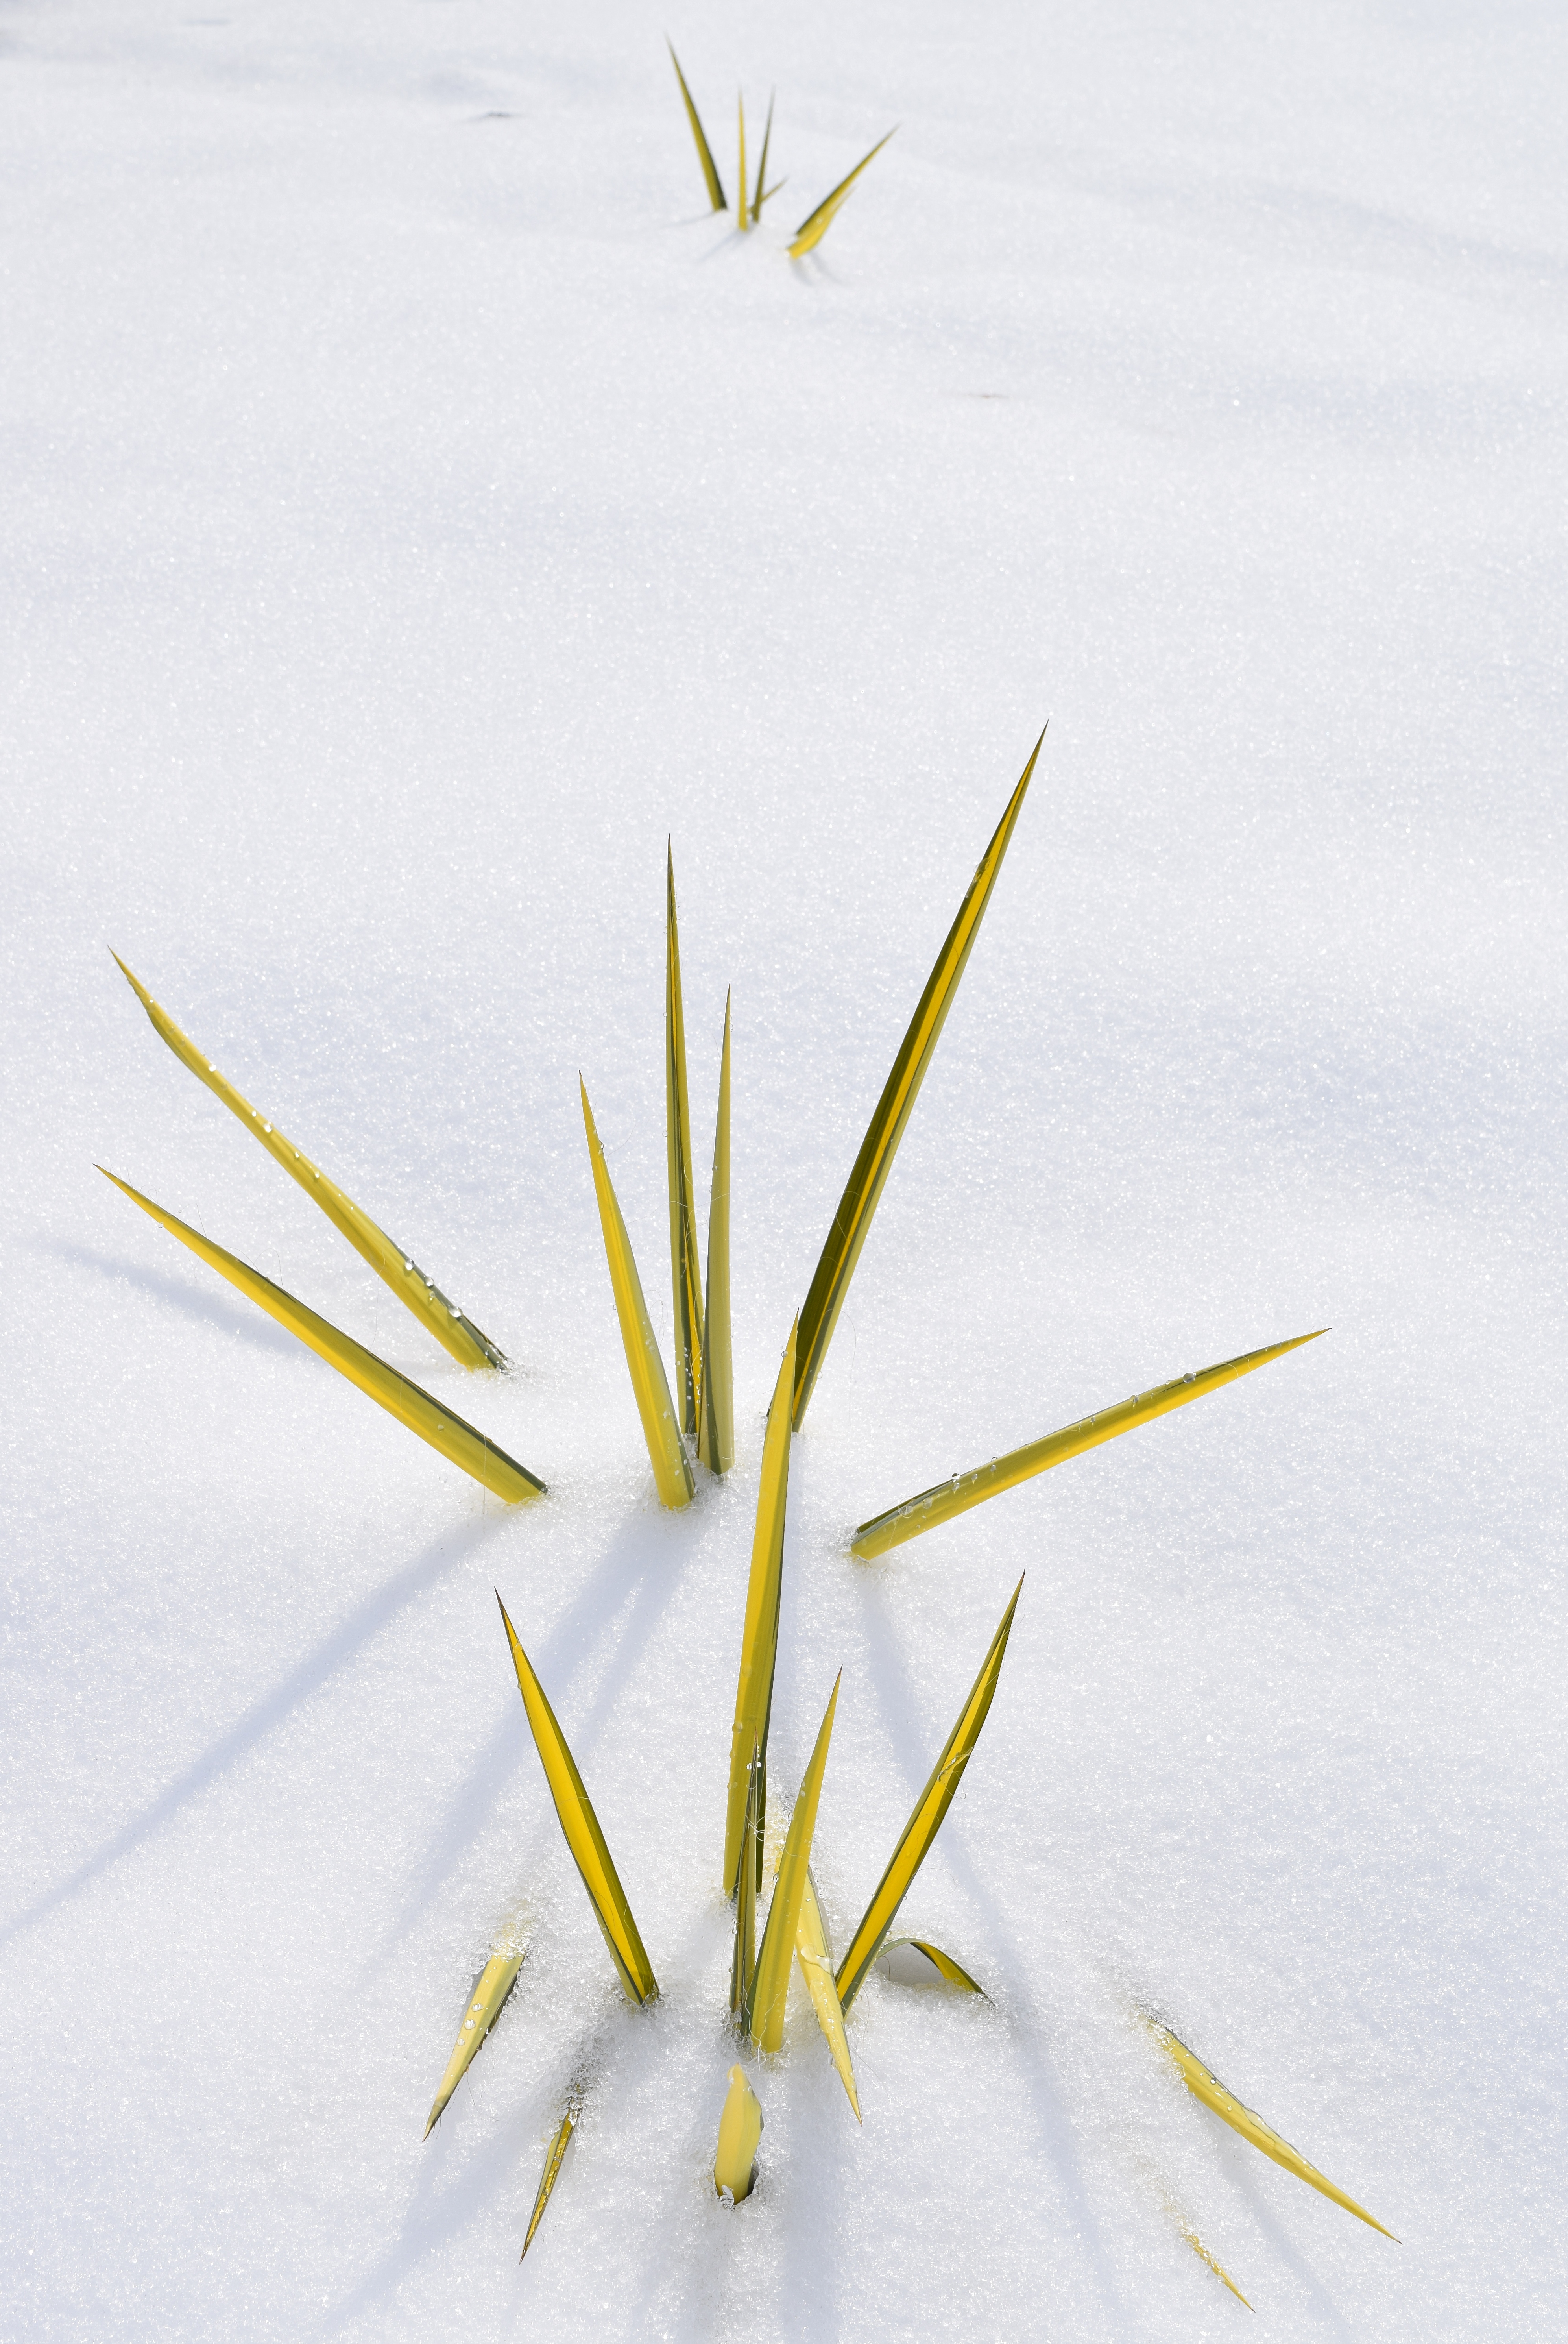 Yucca filamentosa 'Color Guard' putting on a brave show despite the snow